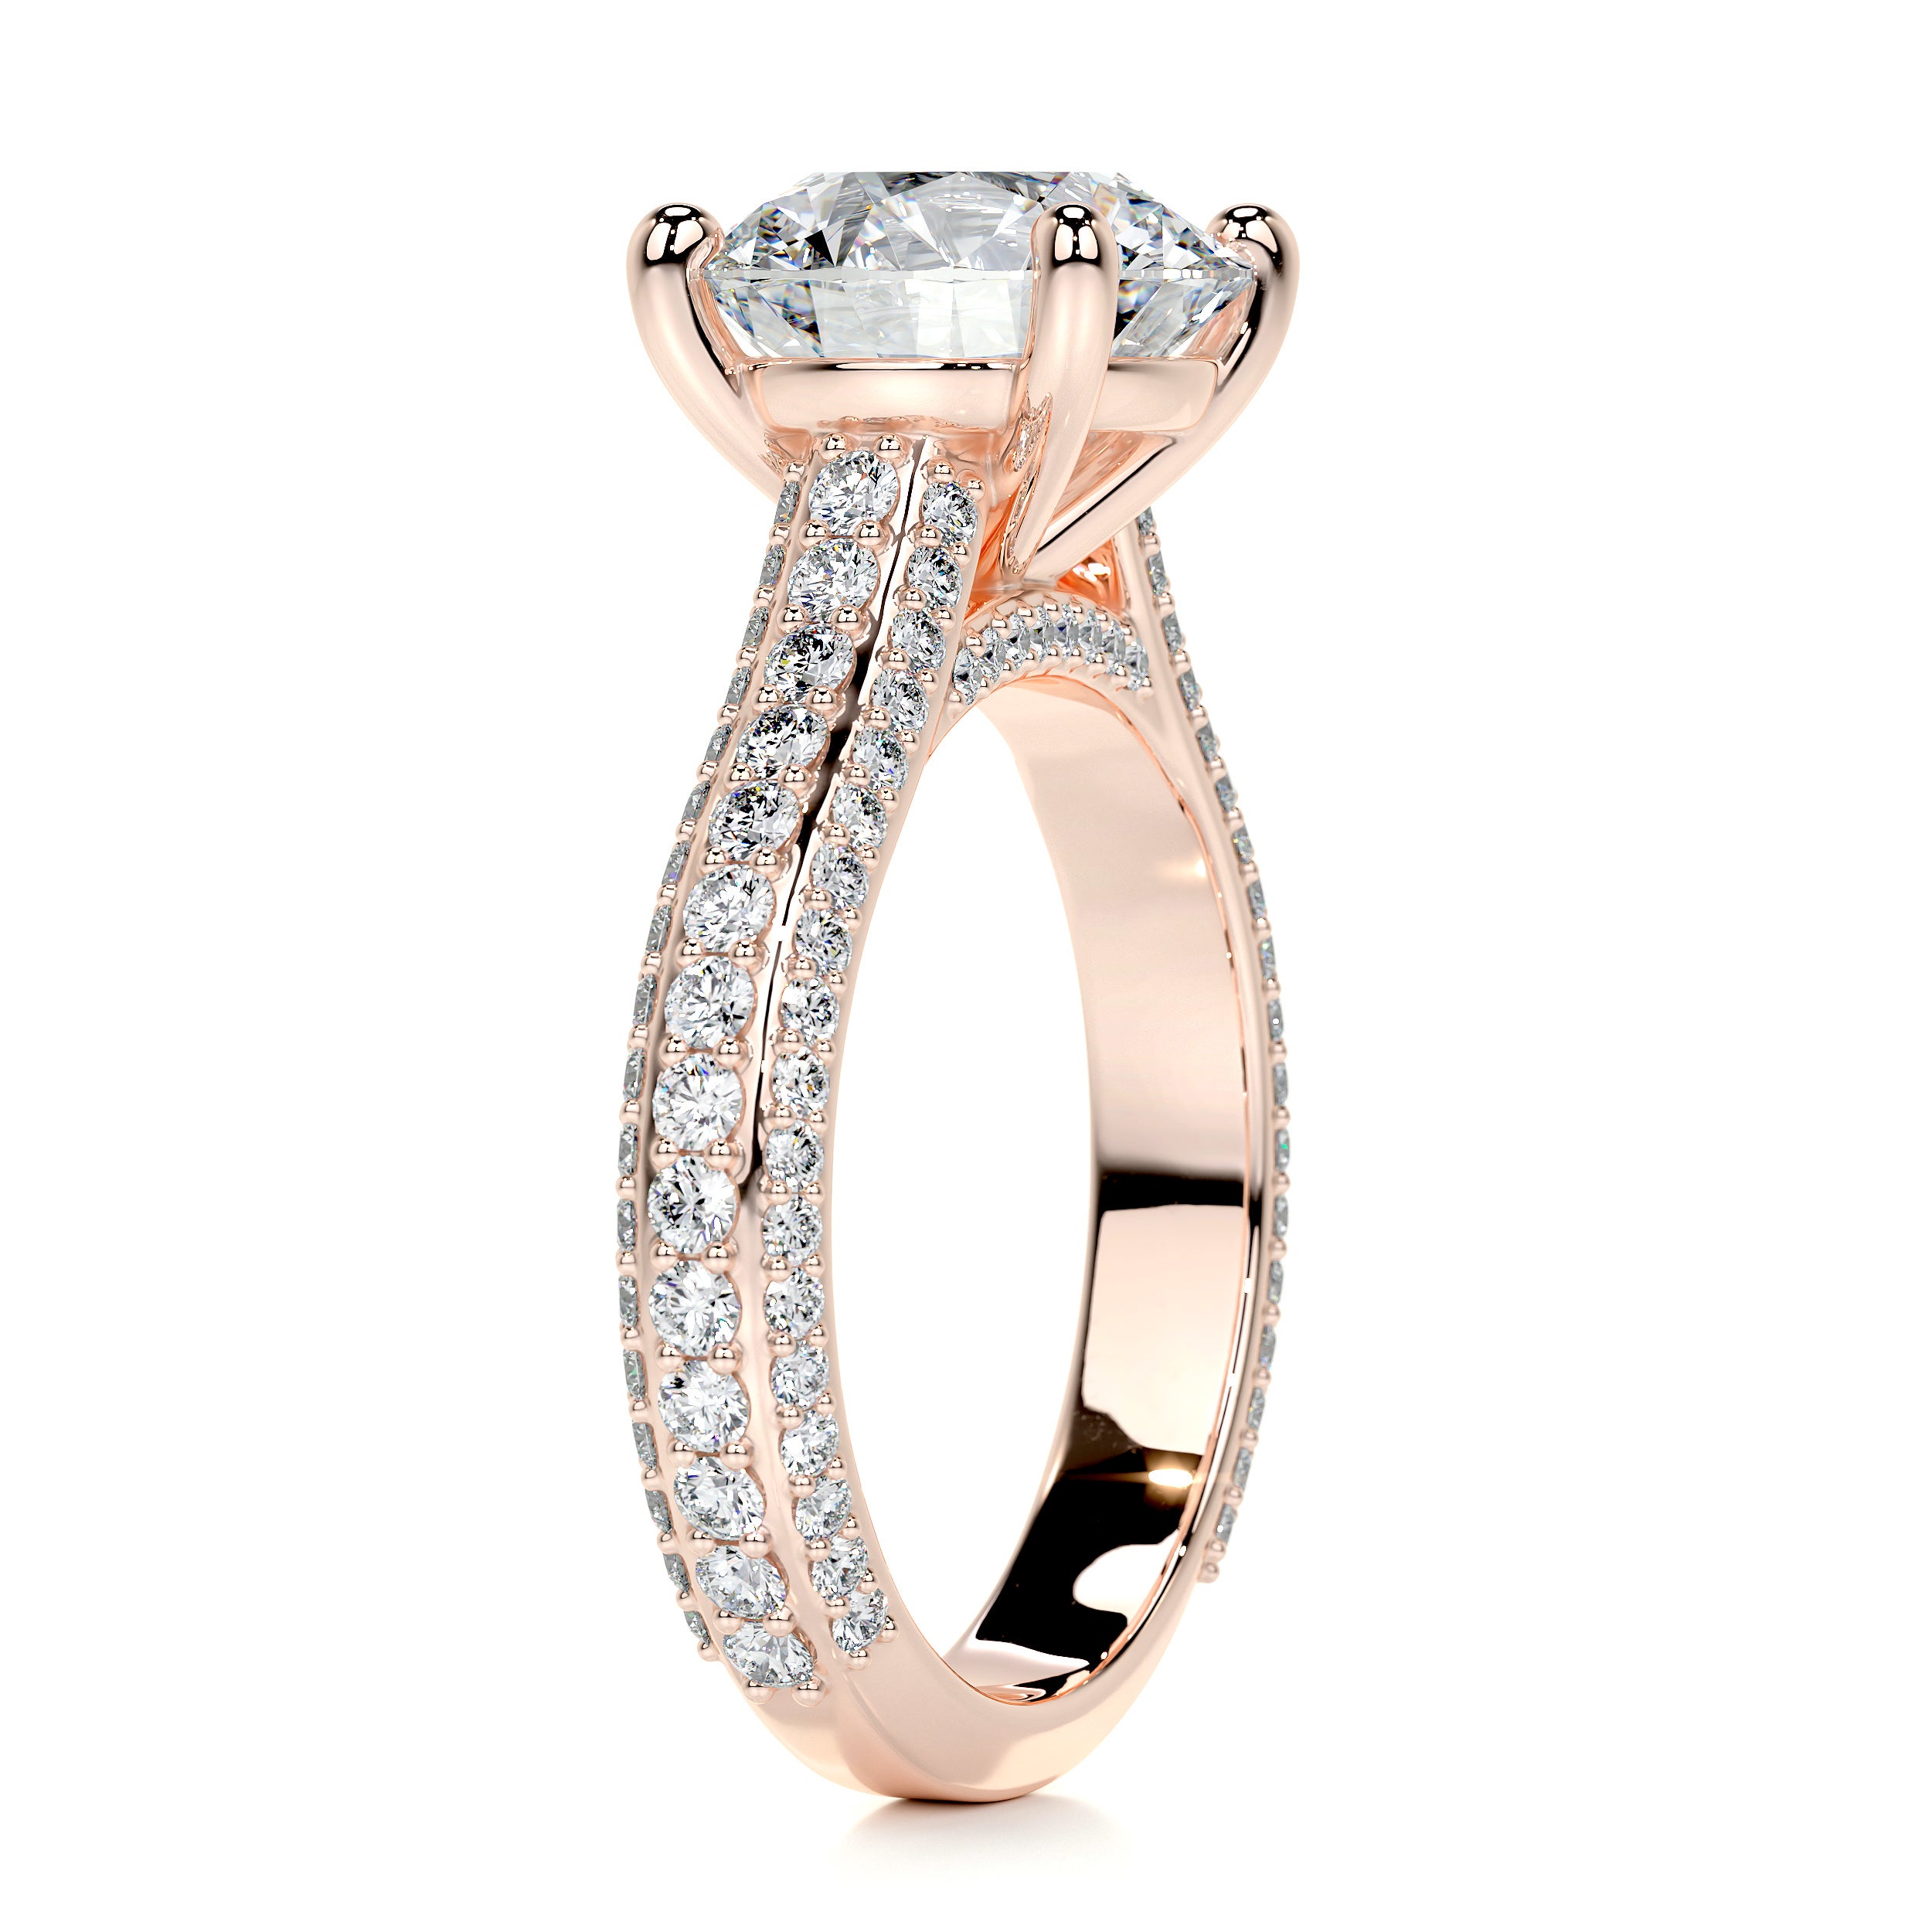 Janet Diamond Engagement Ring -14K Rose Gold